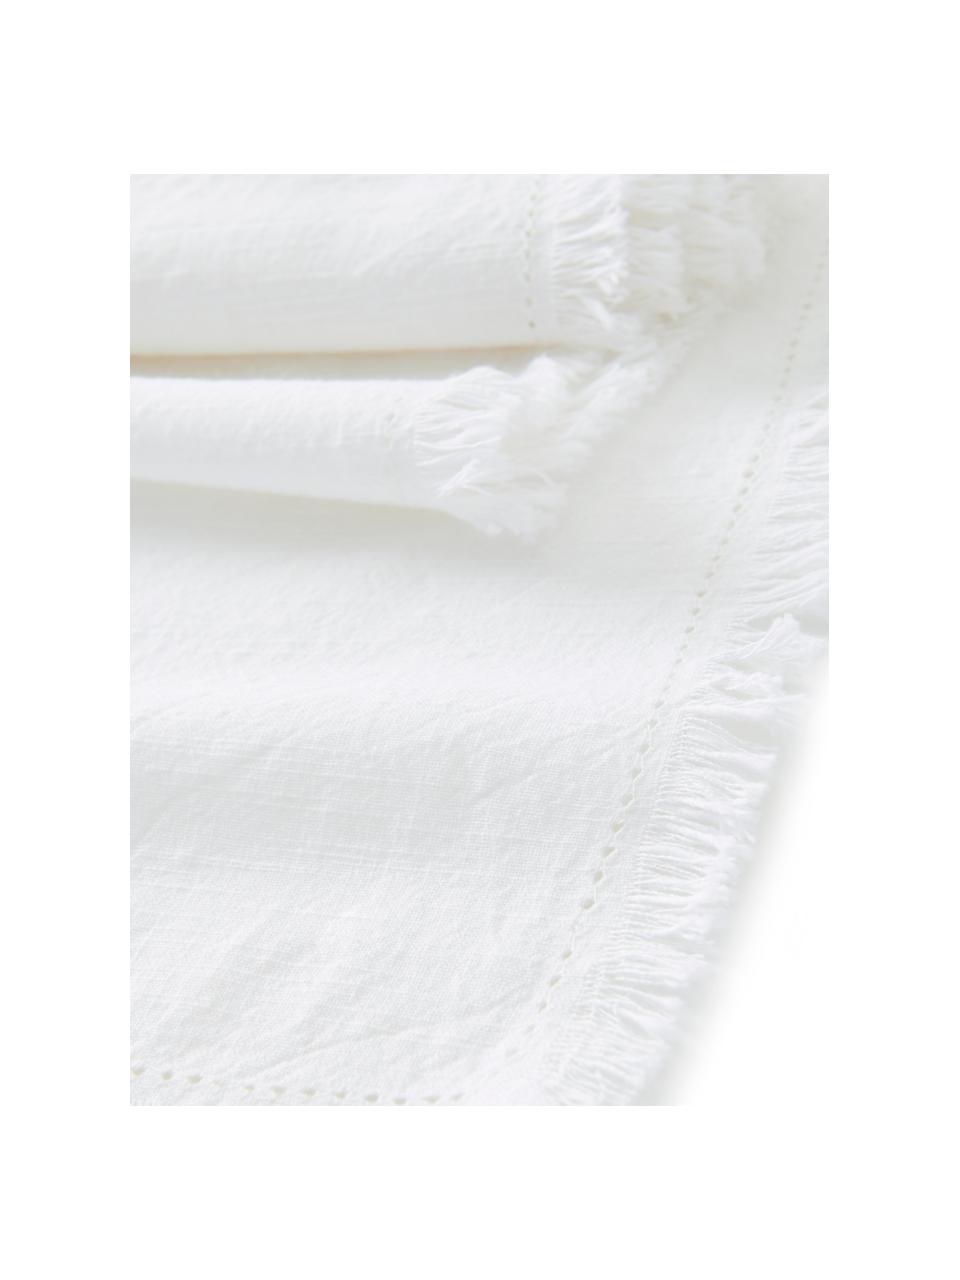 Camino de mesa con flecos Hilma, 100% algodón, Blanco, An 40 x L 140 cm